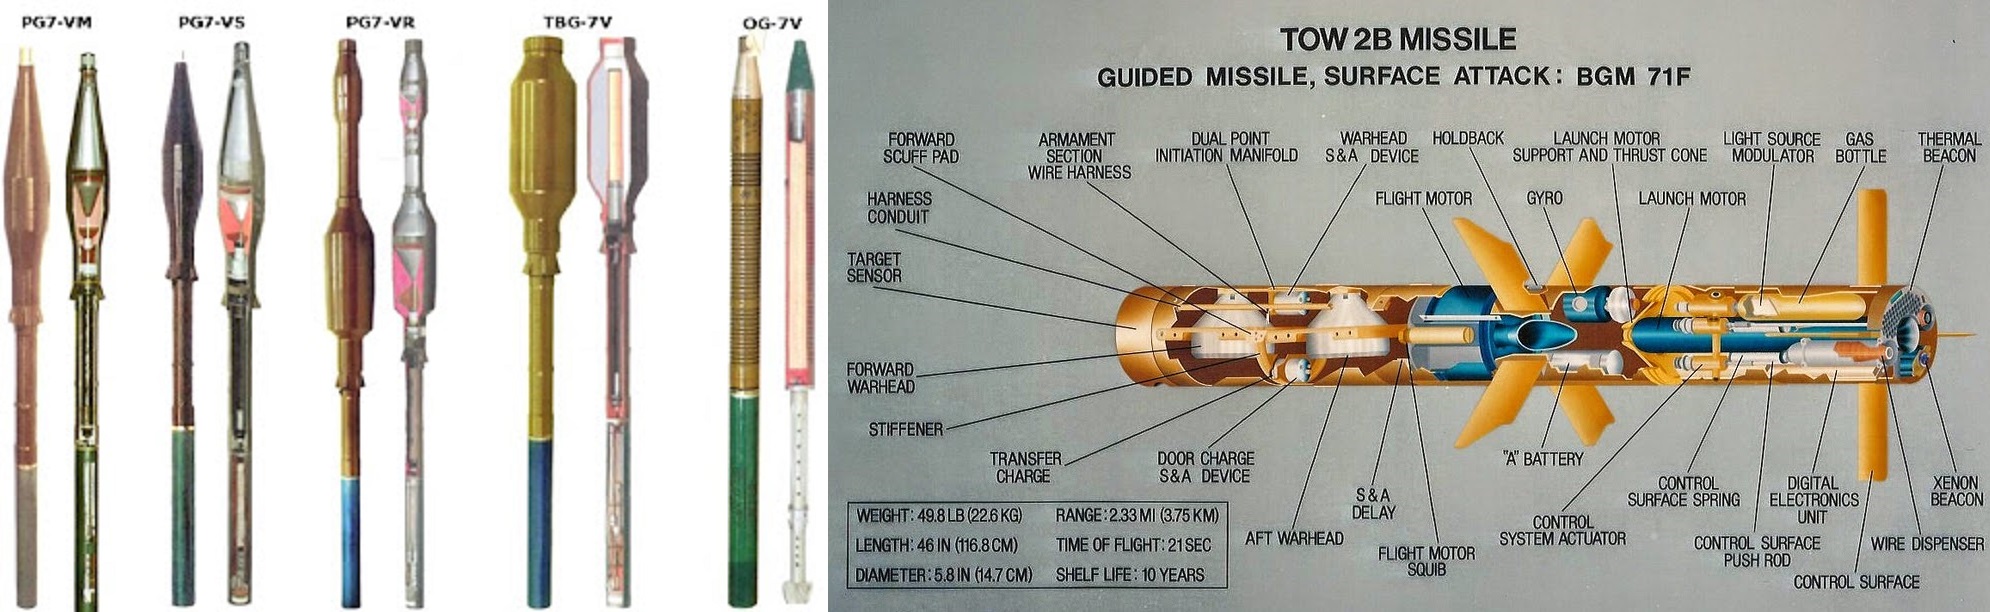 roquette & missile.jpg